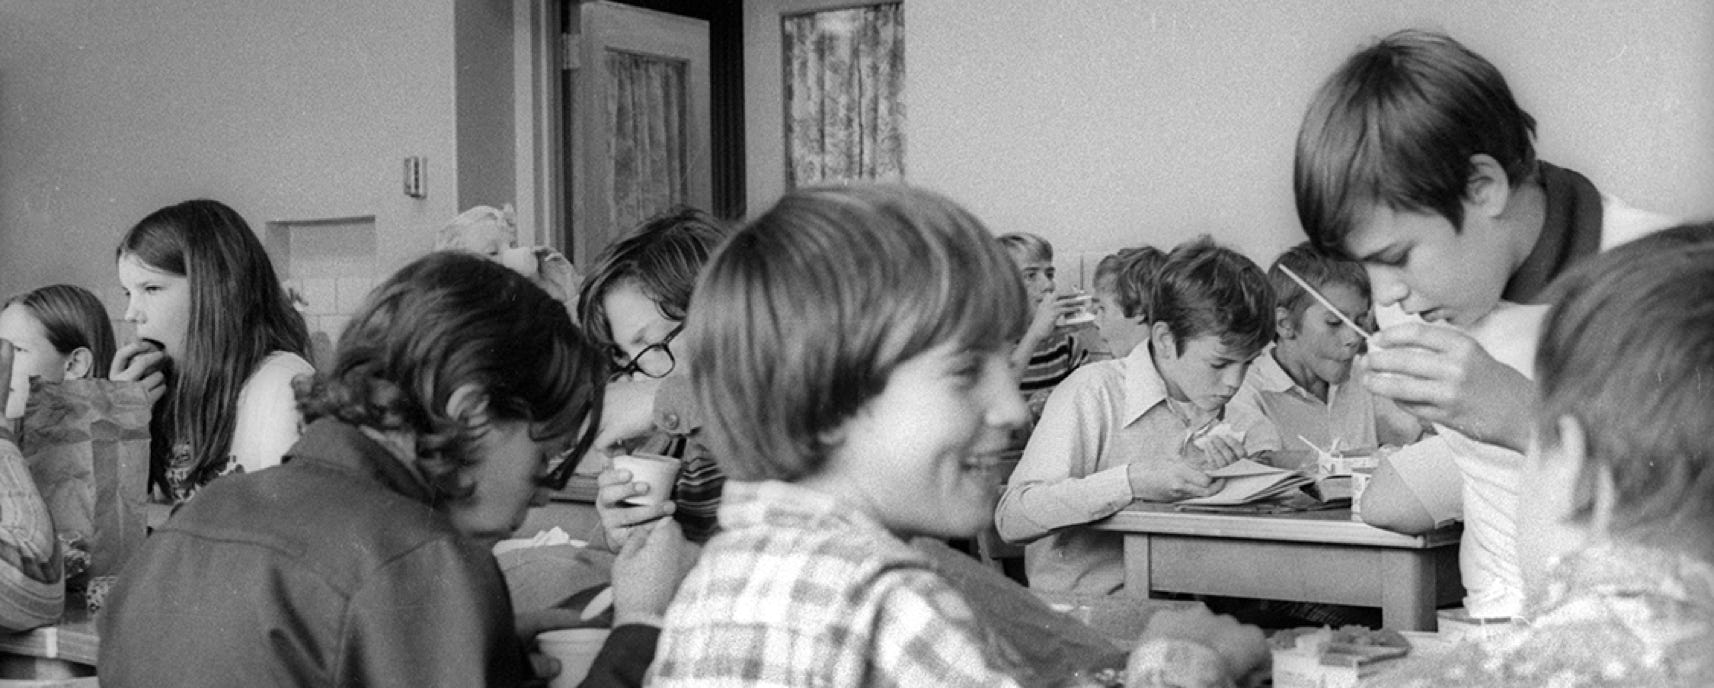 Richard Butler School cafeteria, 1976